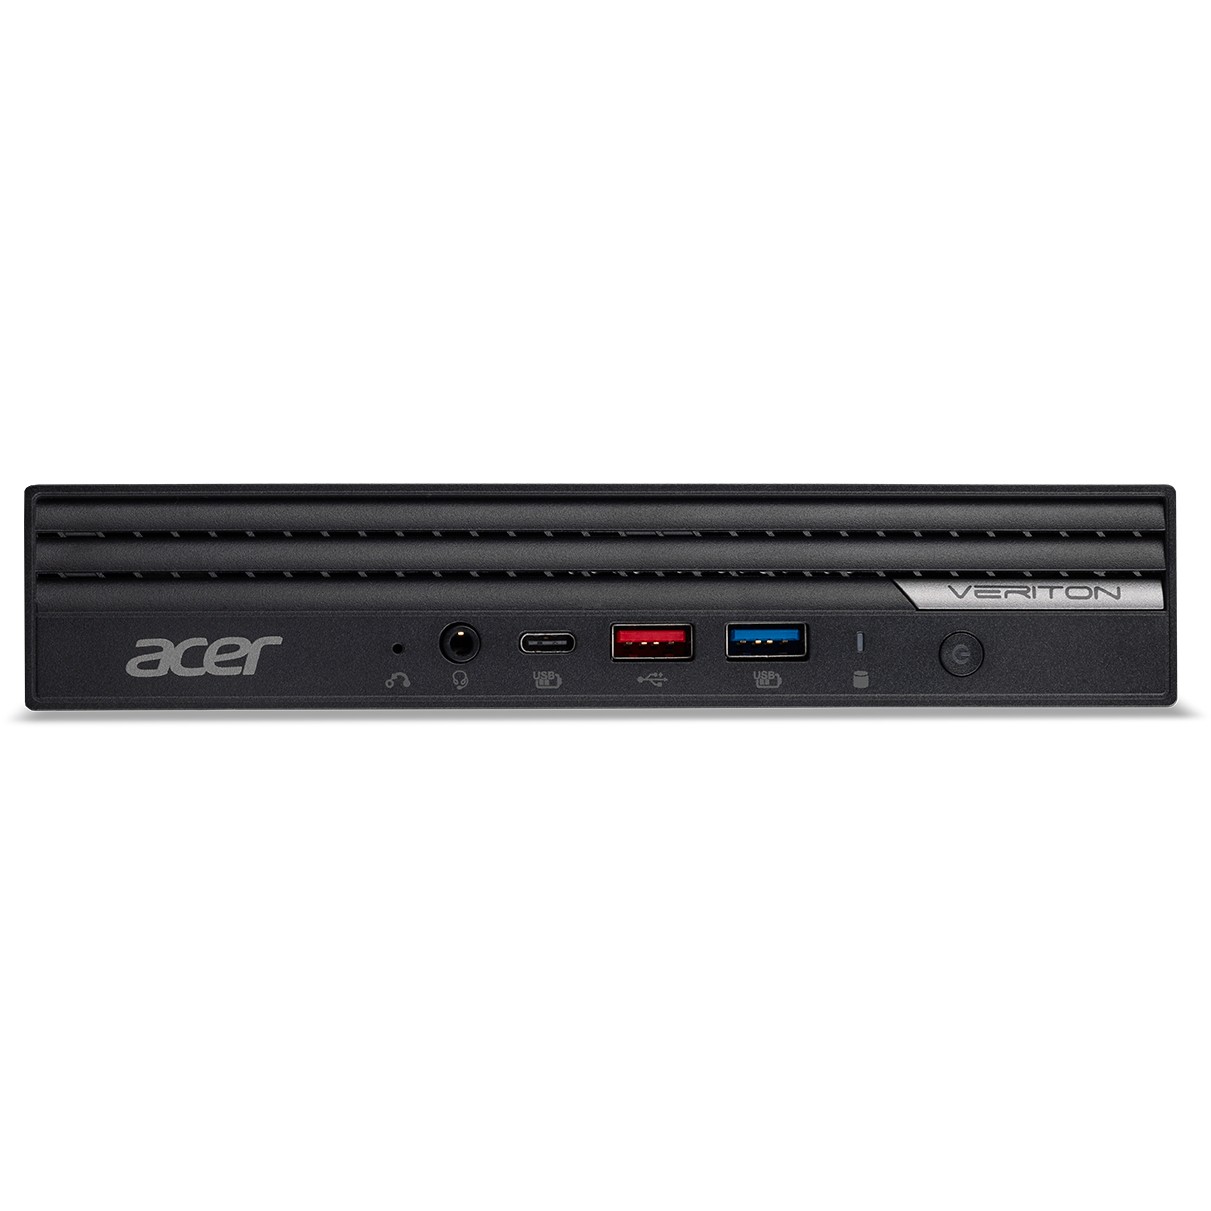 Acer DT.VX4EG.004, Marken PCs, Acer Veriton N N4690GT  (BILD5)